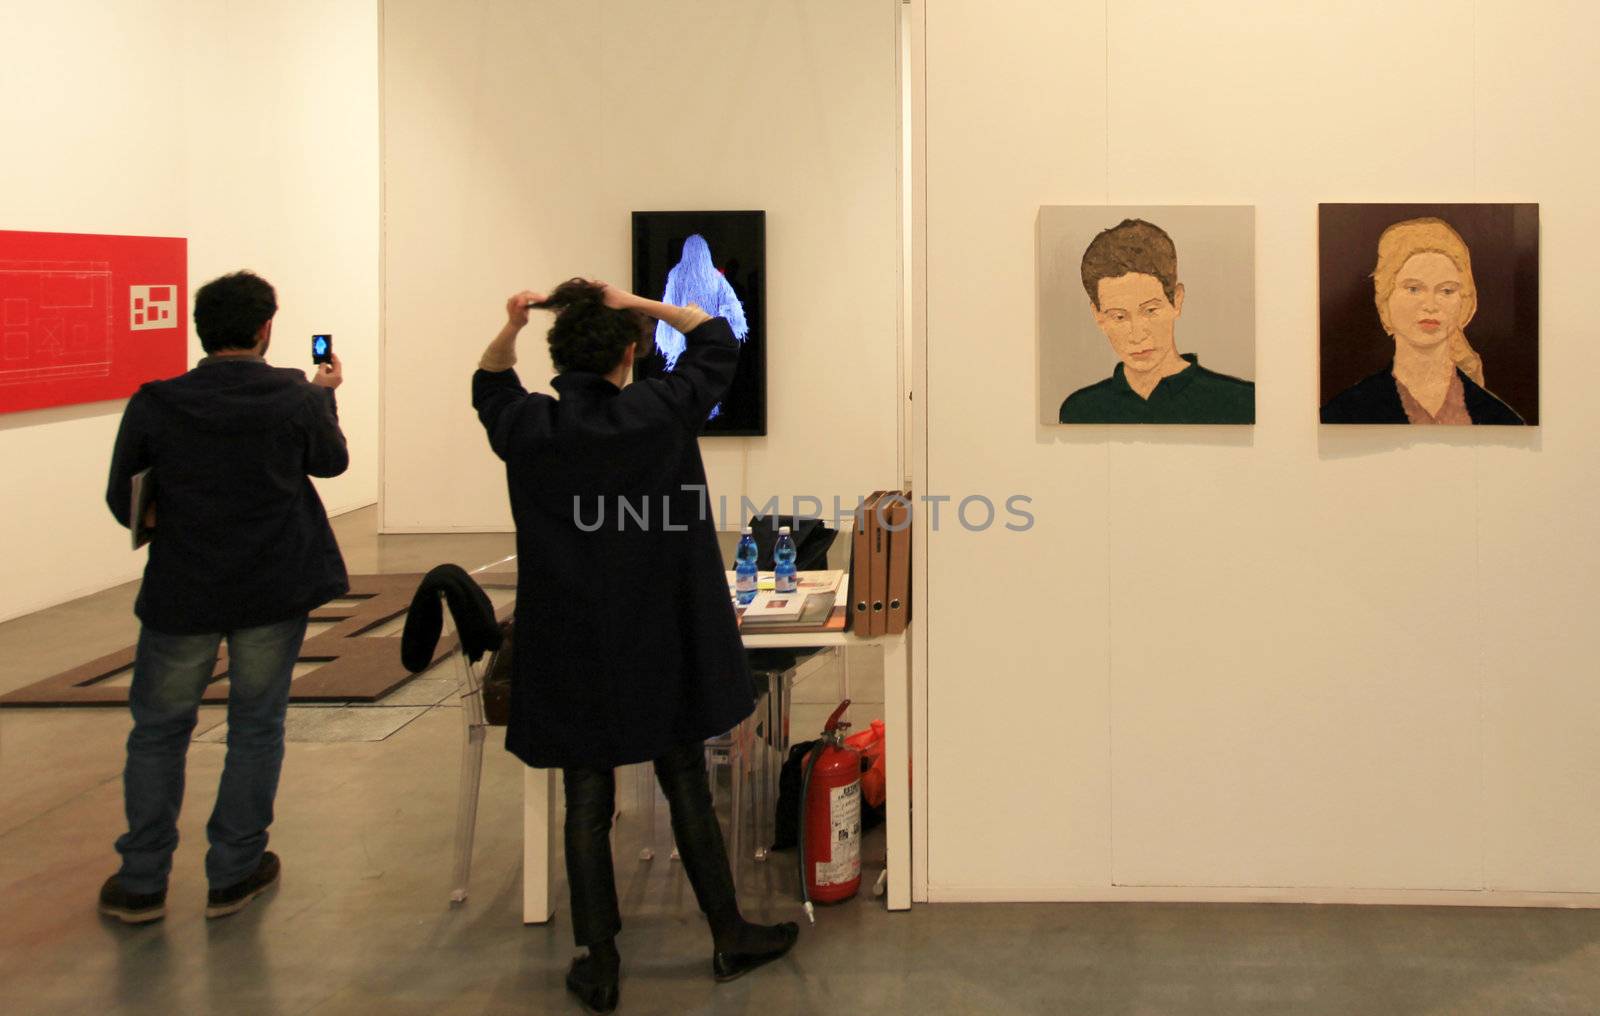 Miart 2013, international exhibition of modern art by adrianocastelli